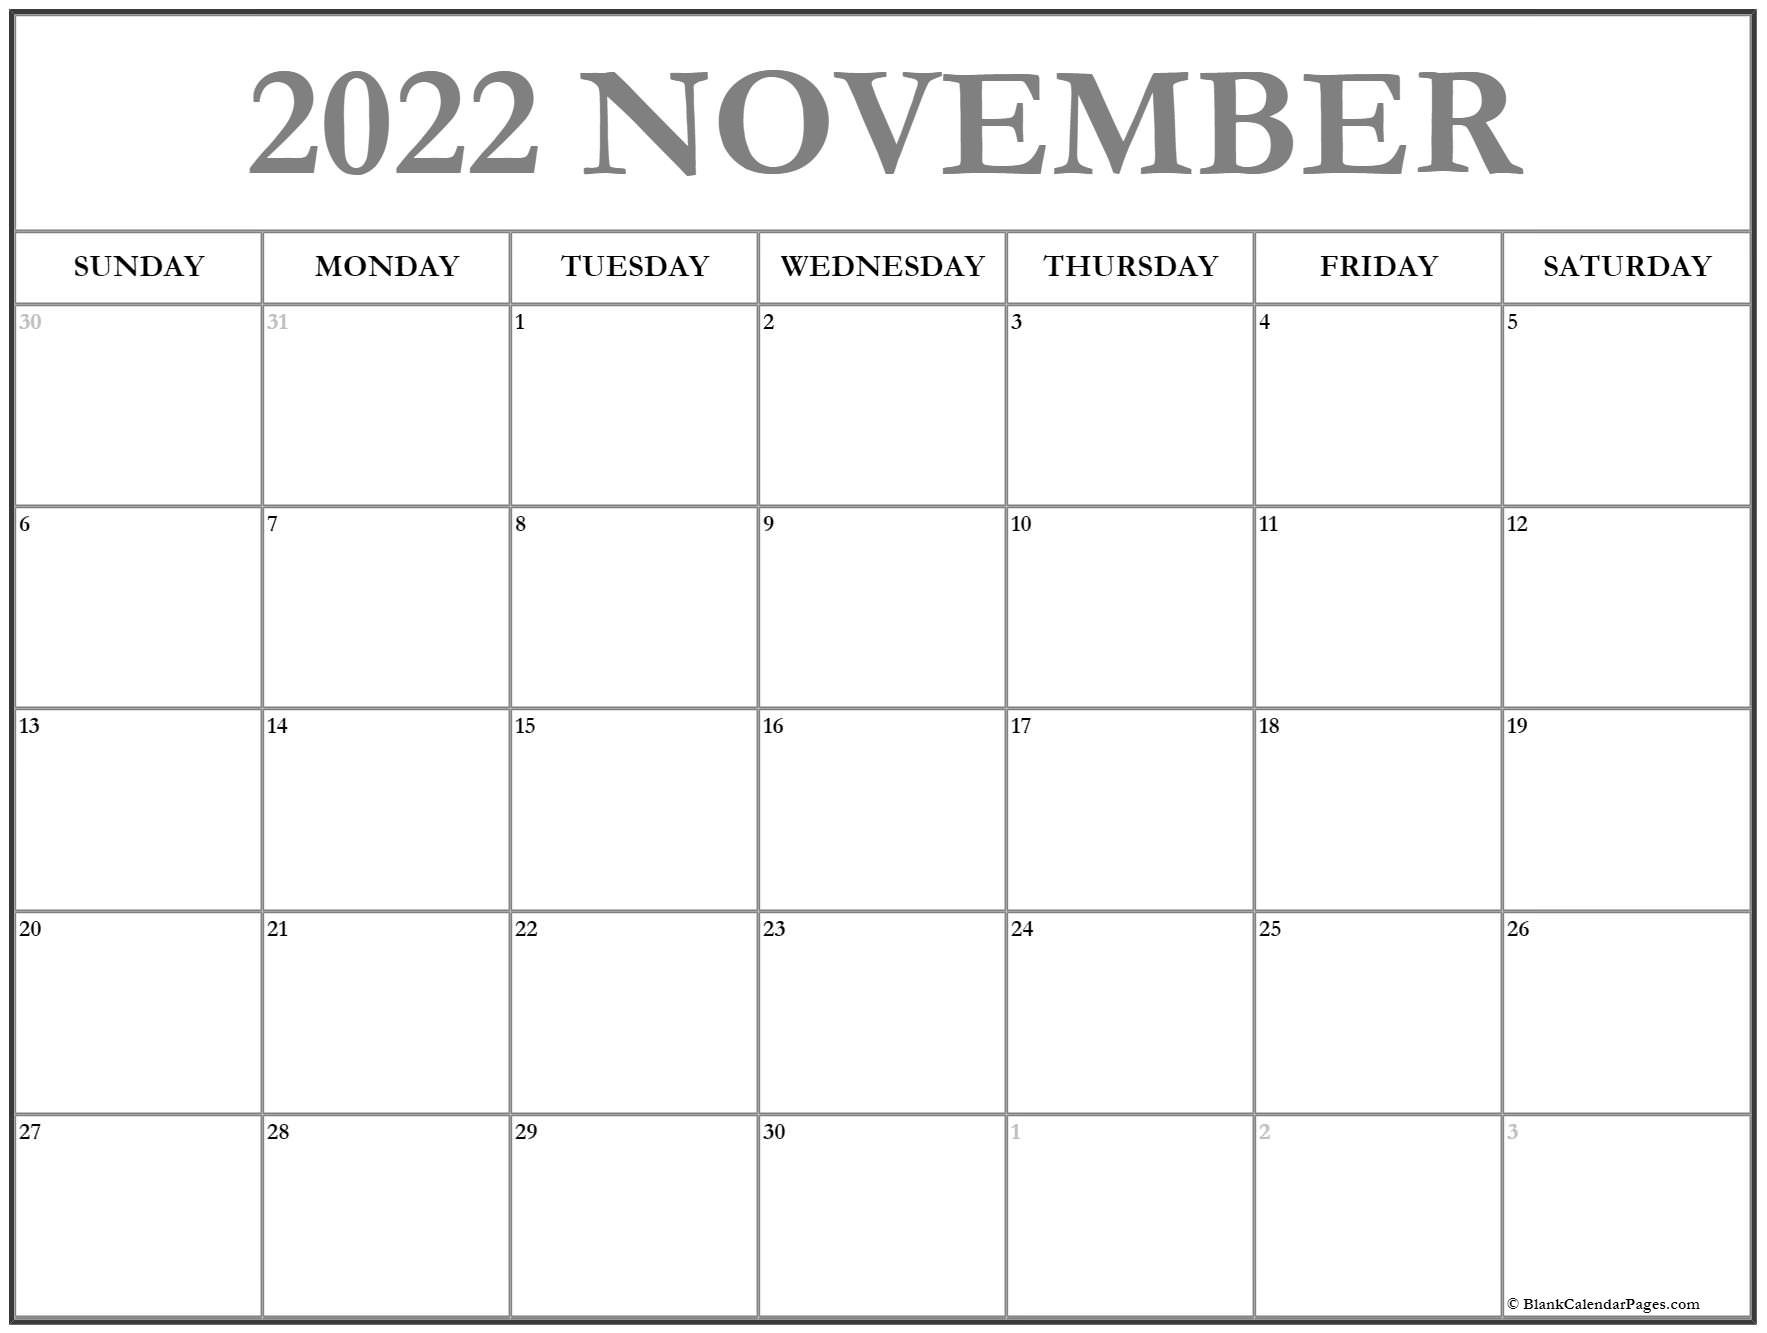 November 2022 Calendar | Free Printable Calendar Templates  Free Printable Calendar 2022 November